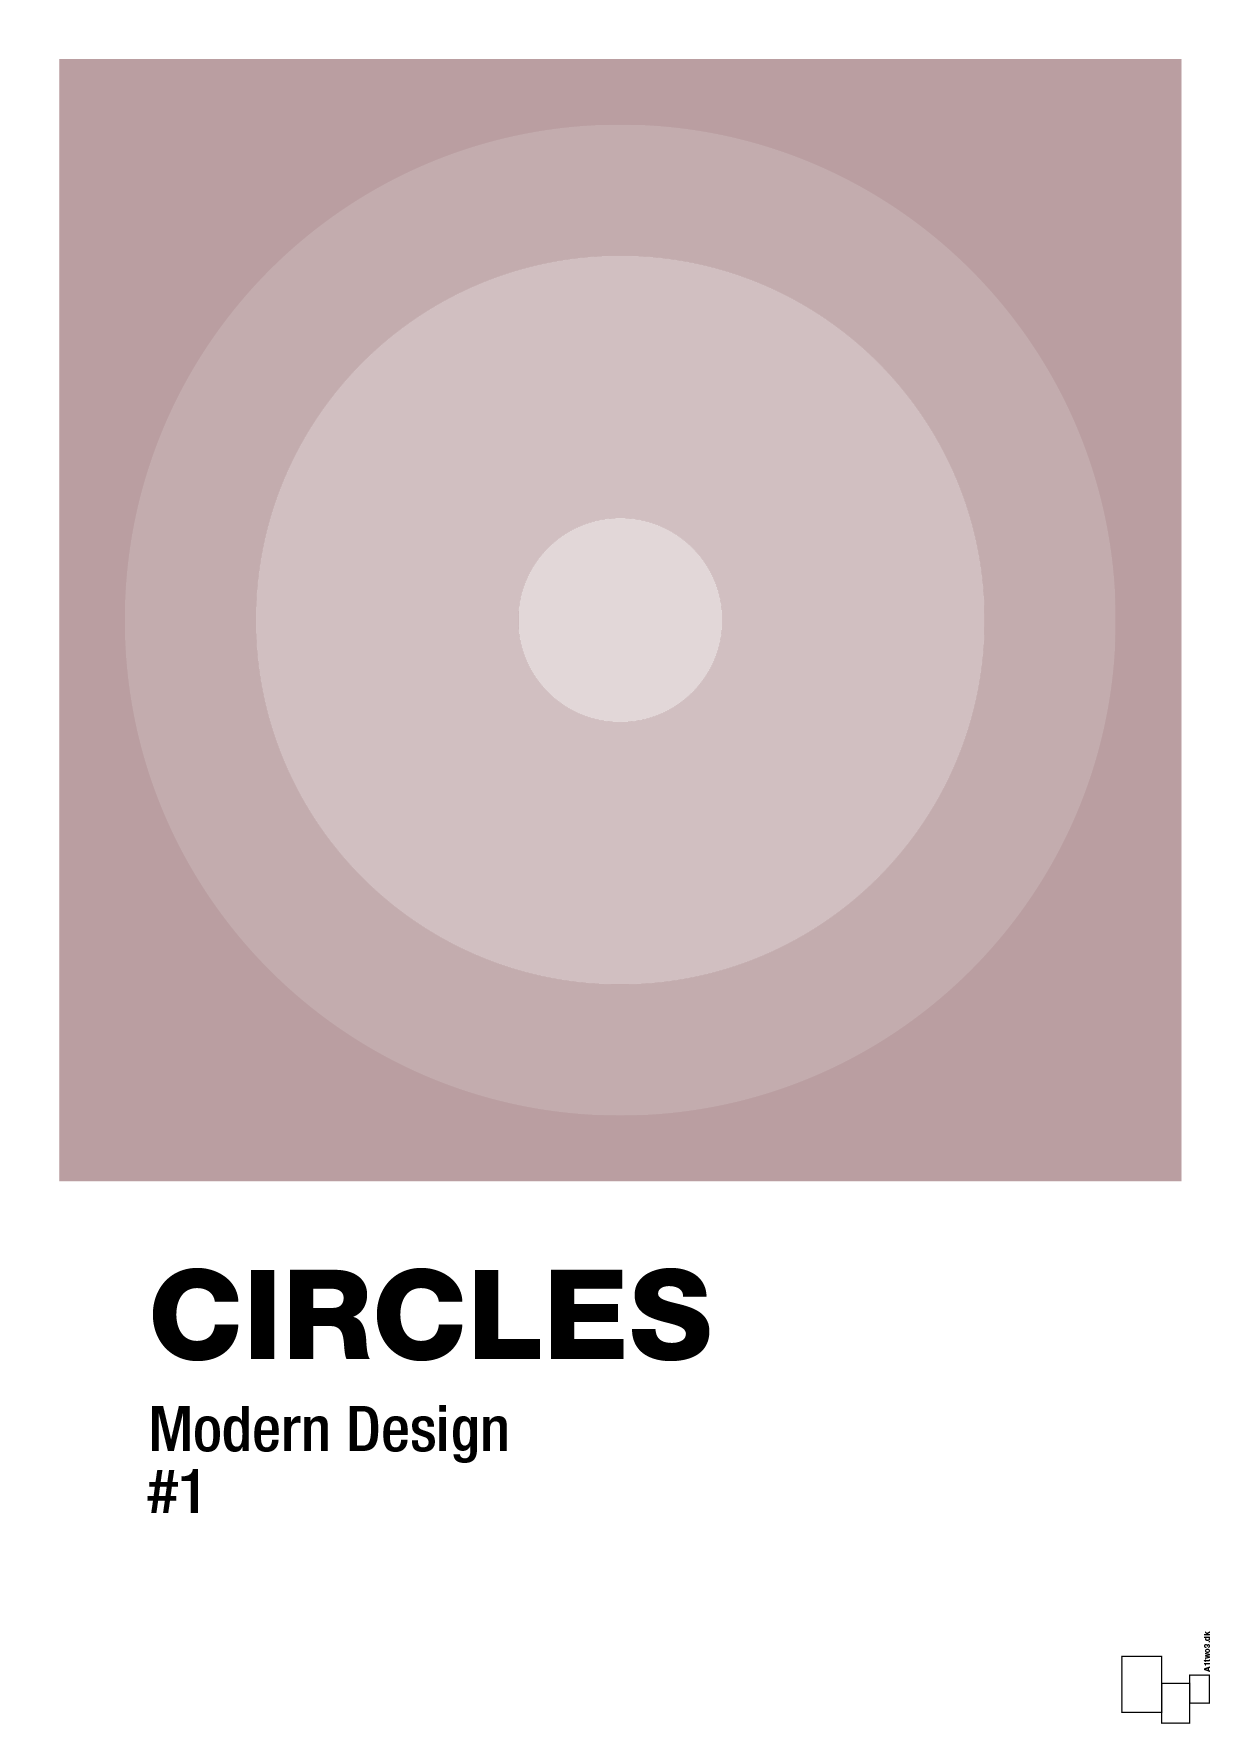 circles #1 - Plakat med Grafik i Light Rose